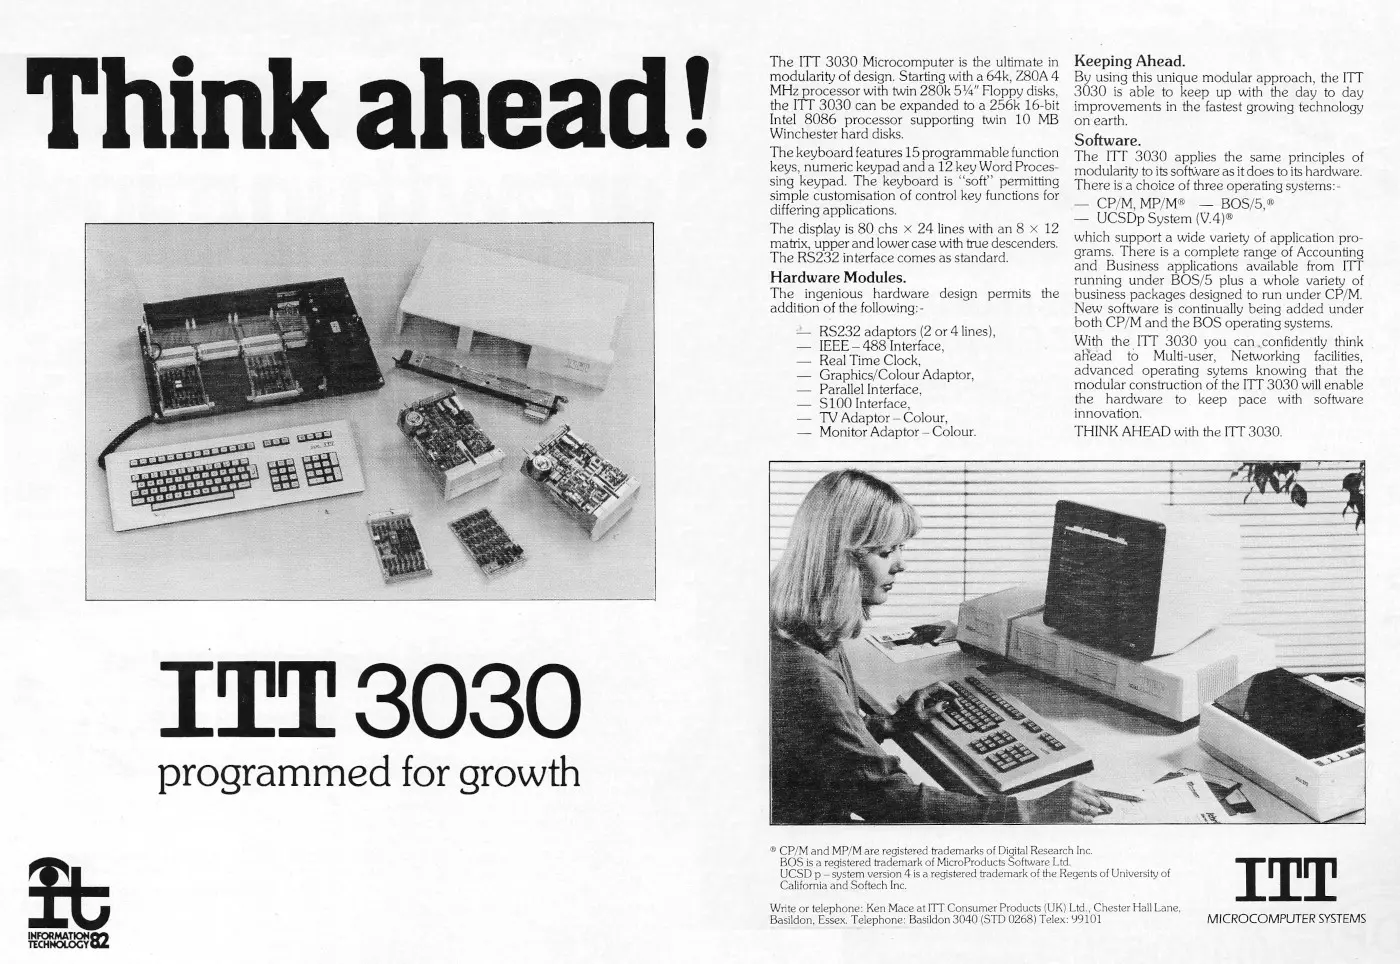 ITT Advert: Think ahead! ITT 3030 Programmed for Growth, from Personal Computer World, July 1982